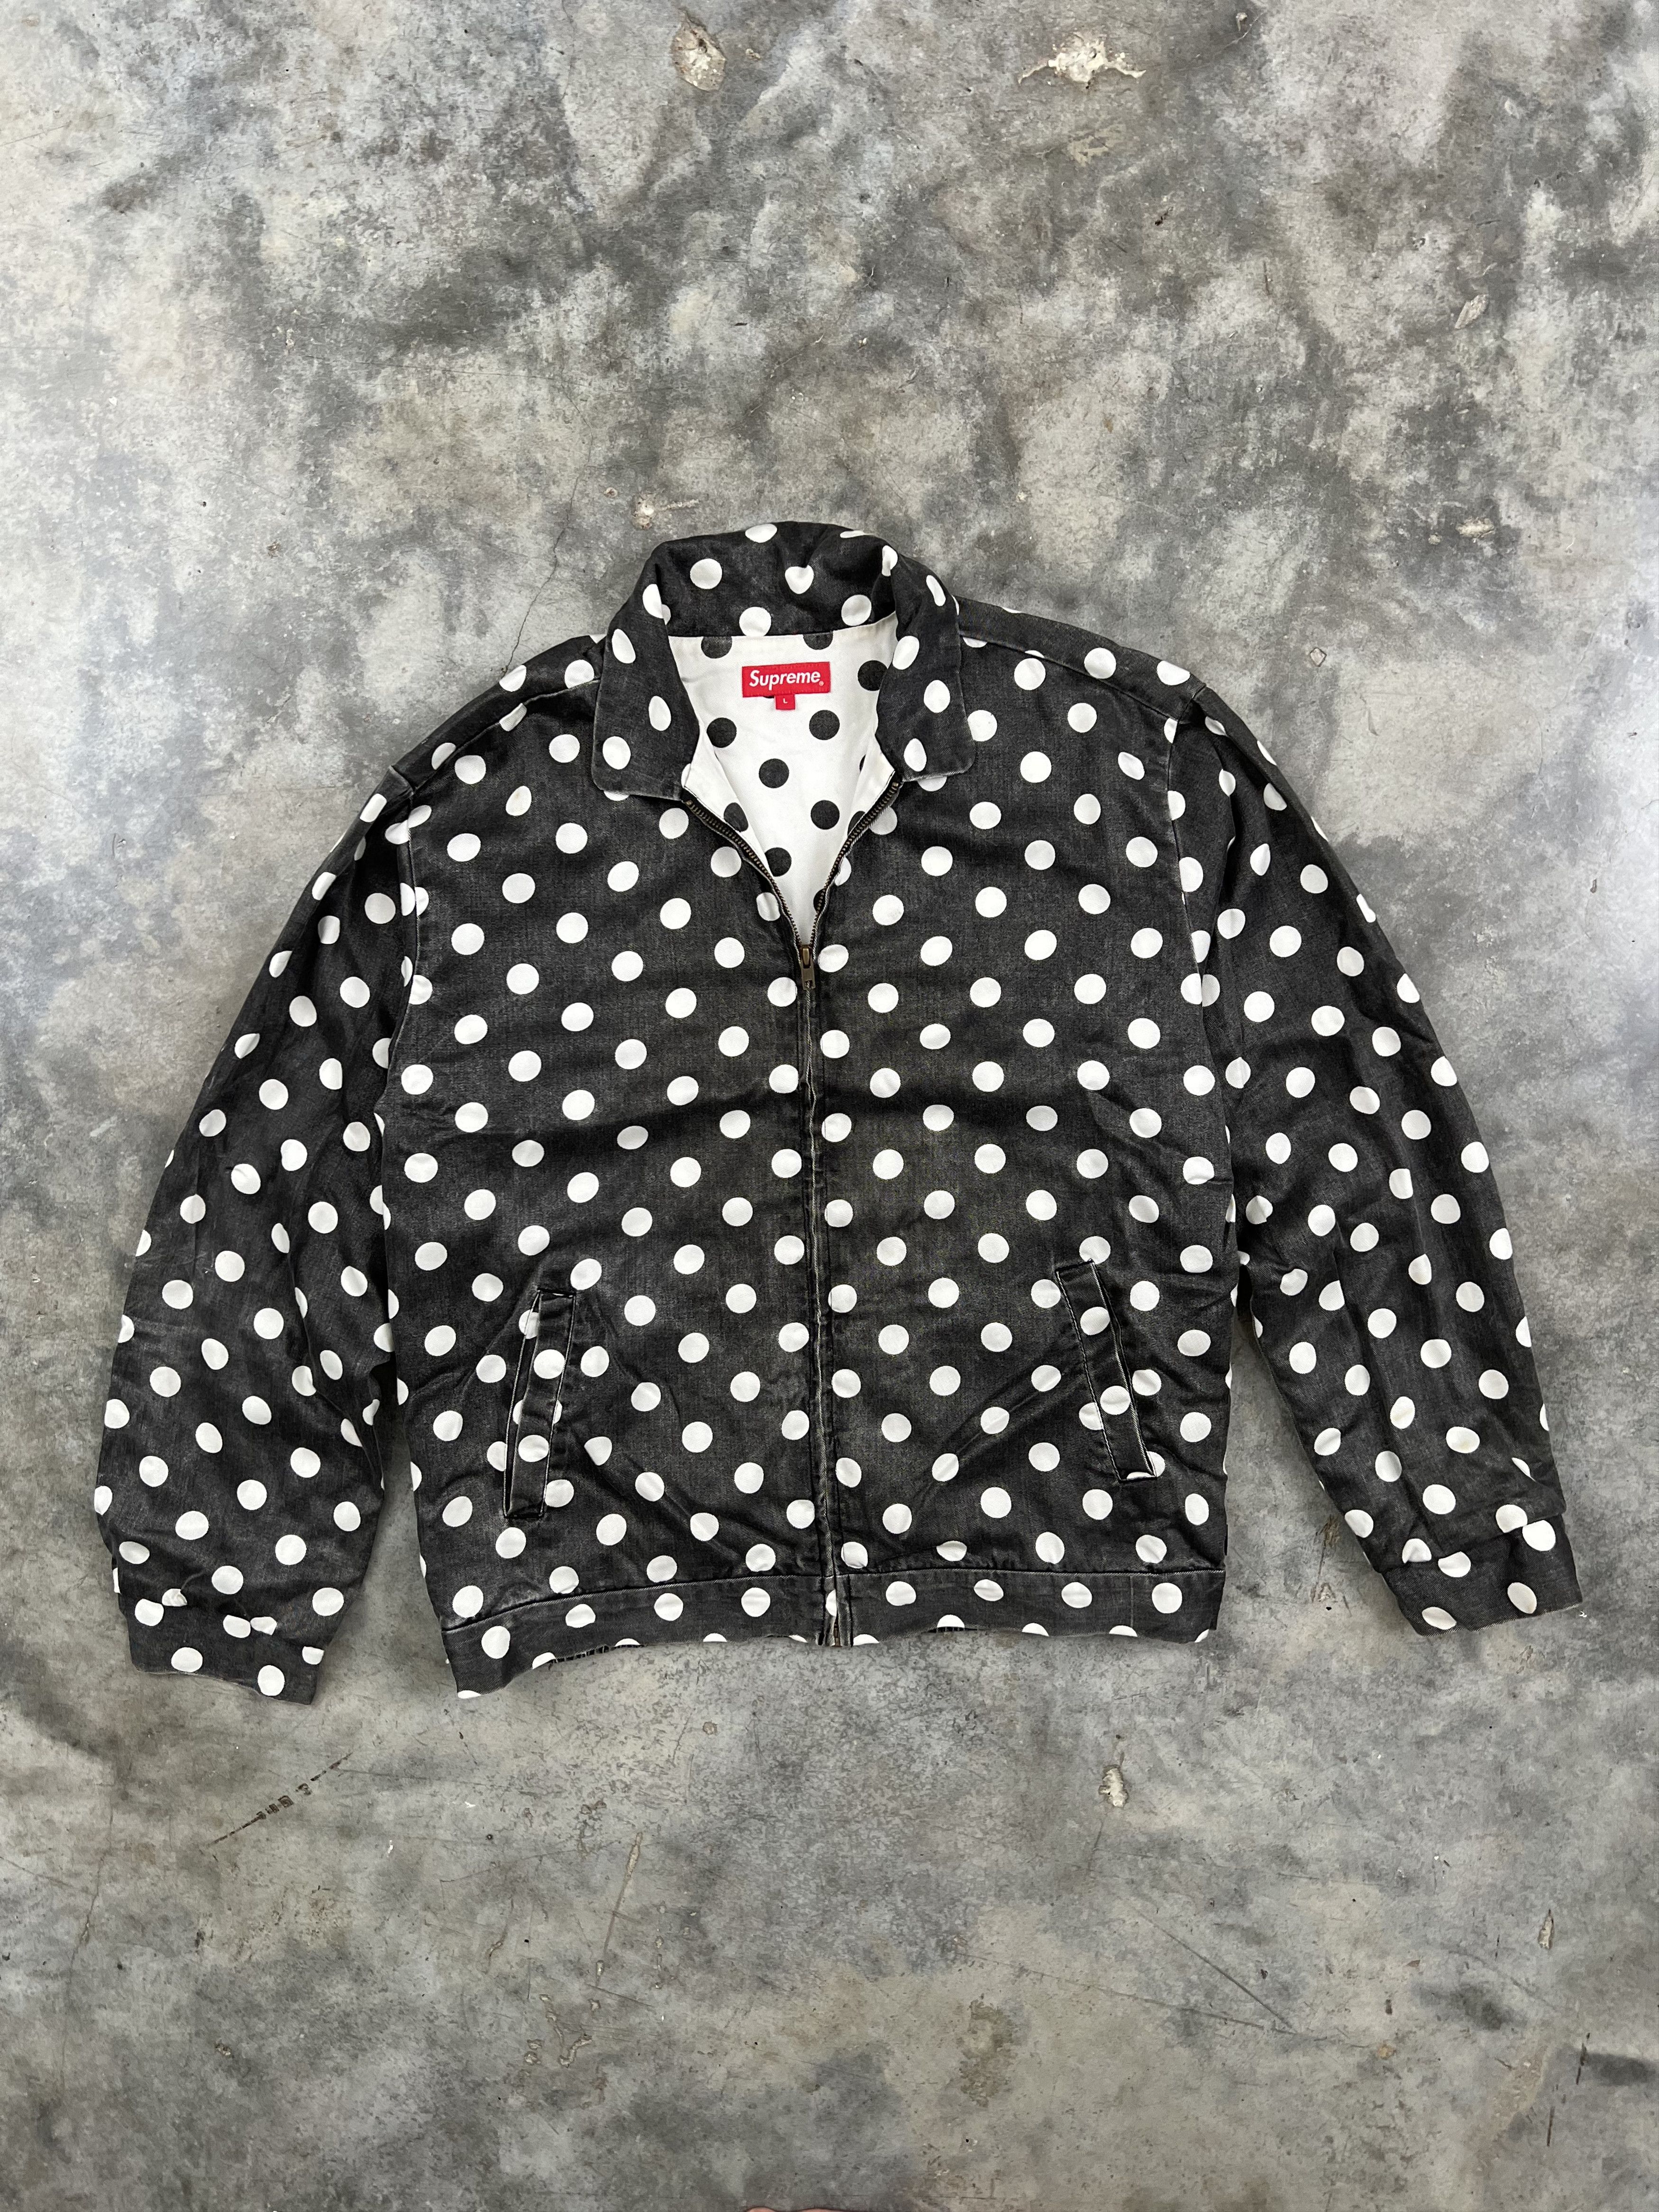 Supreme Polka Dots Rayon Work Jacket | Grailed